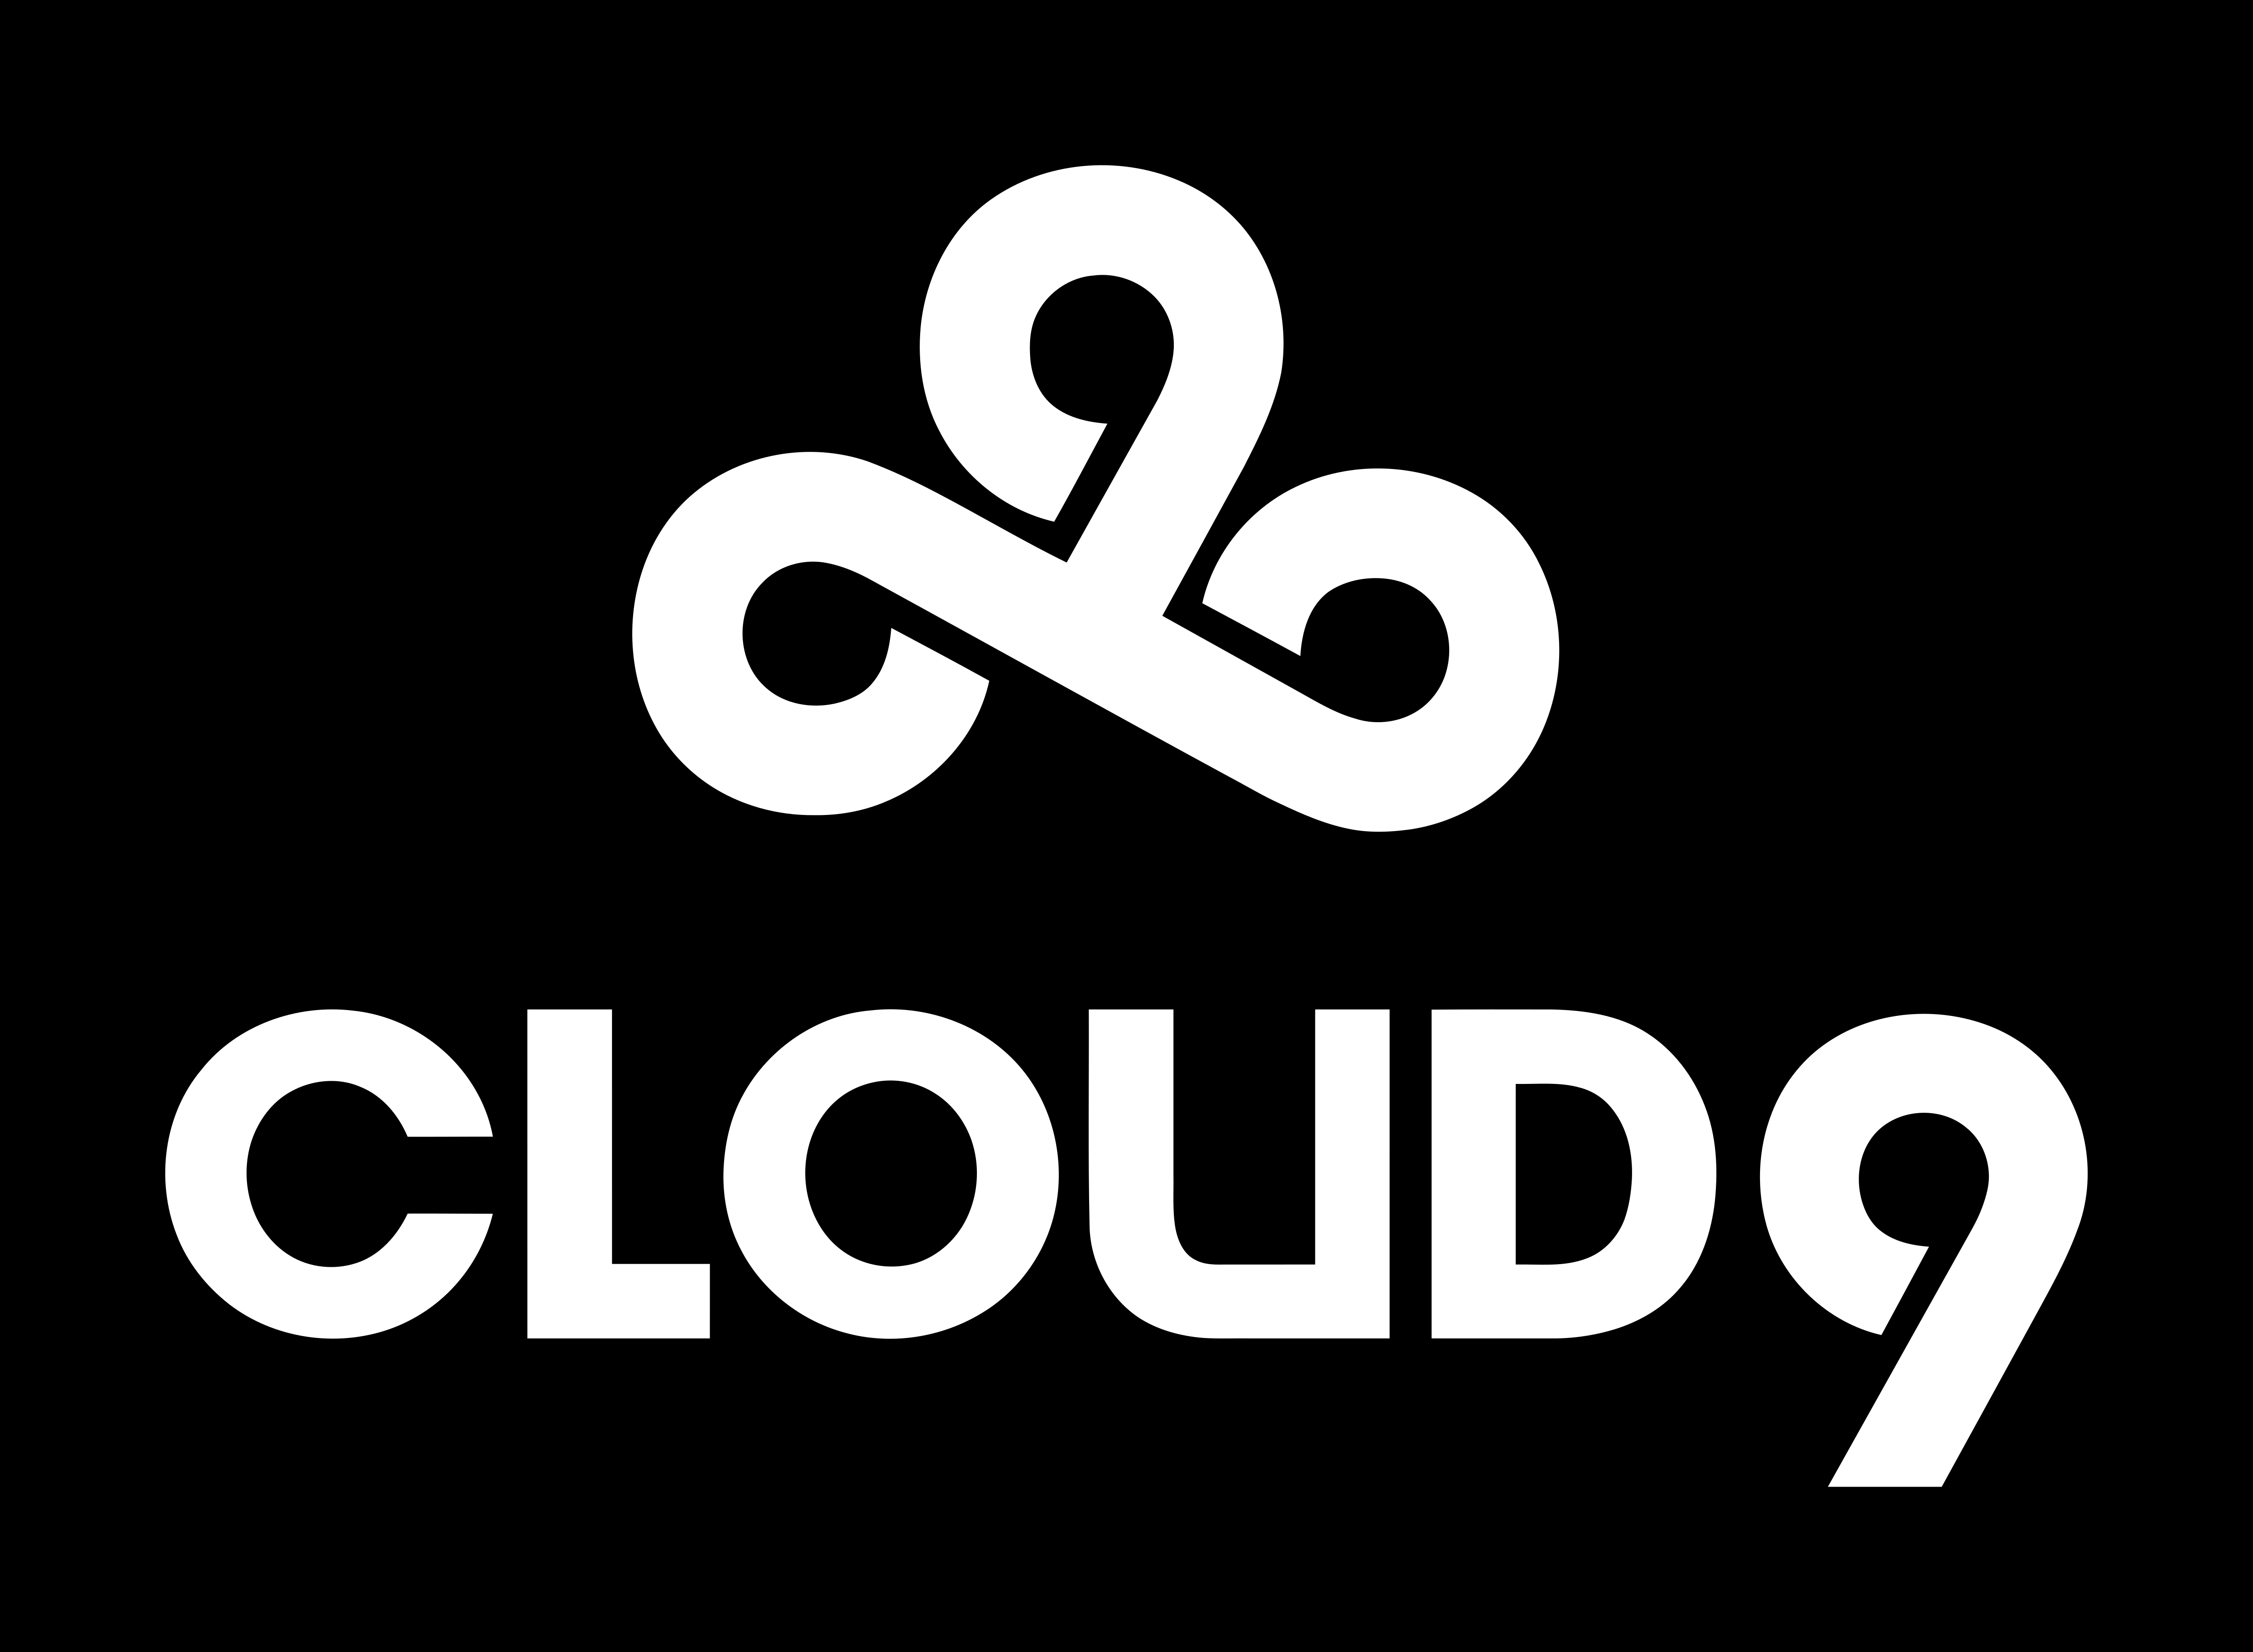 Cloud 9 1. Клоуд 9. Лого Клауд 9. Логотип cloud9. Ава Клауд 9.